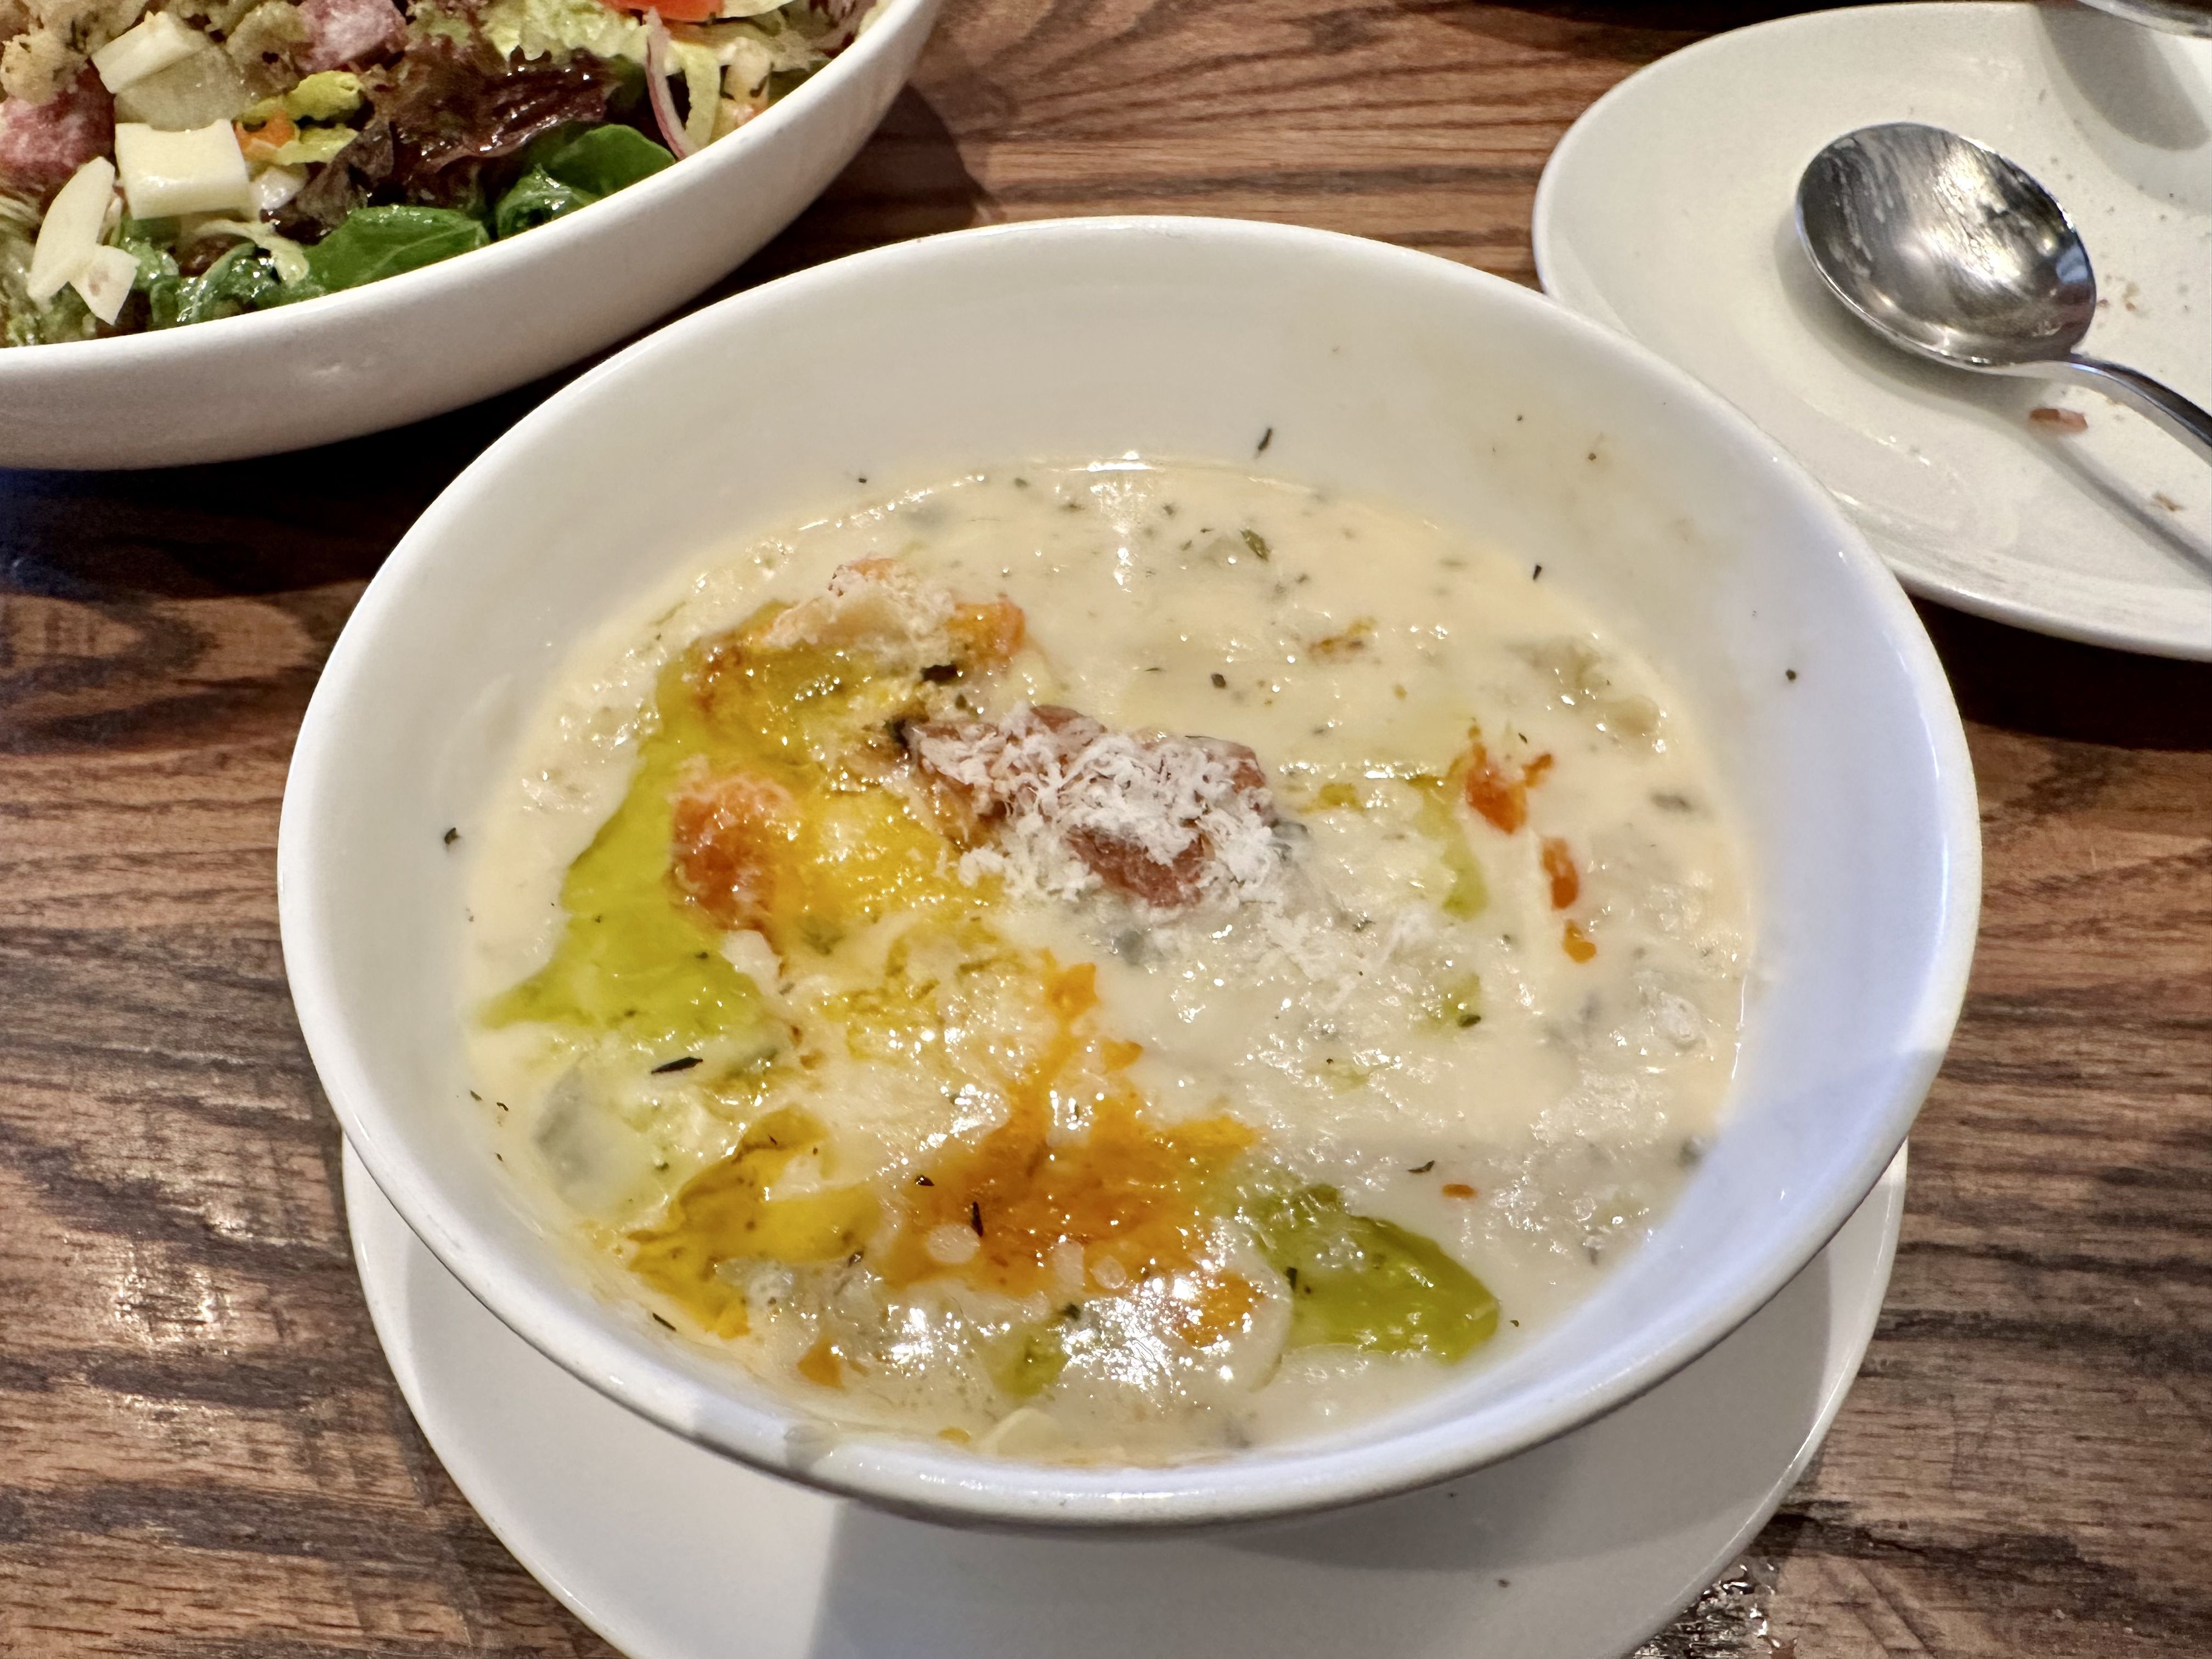 Photo shows a bowl of stuffed artichoke soup